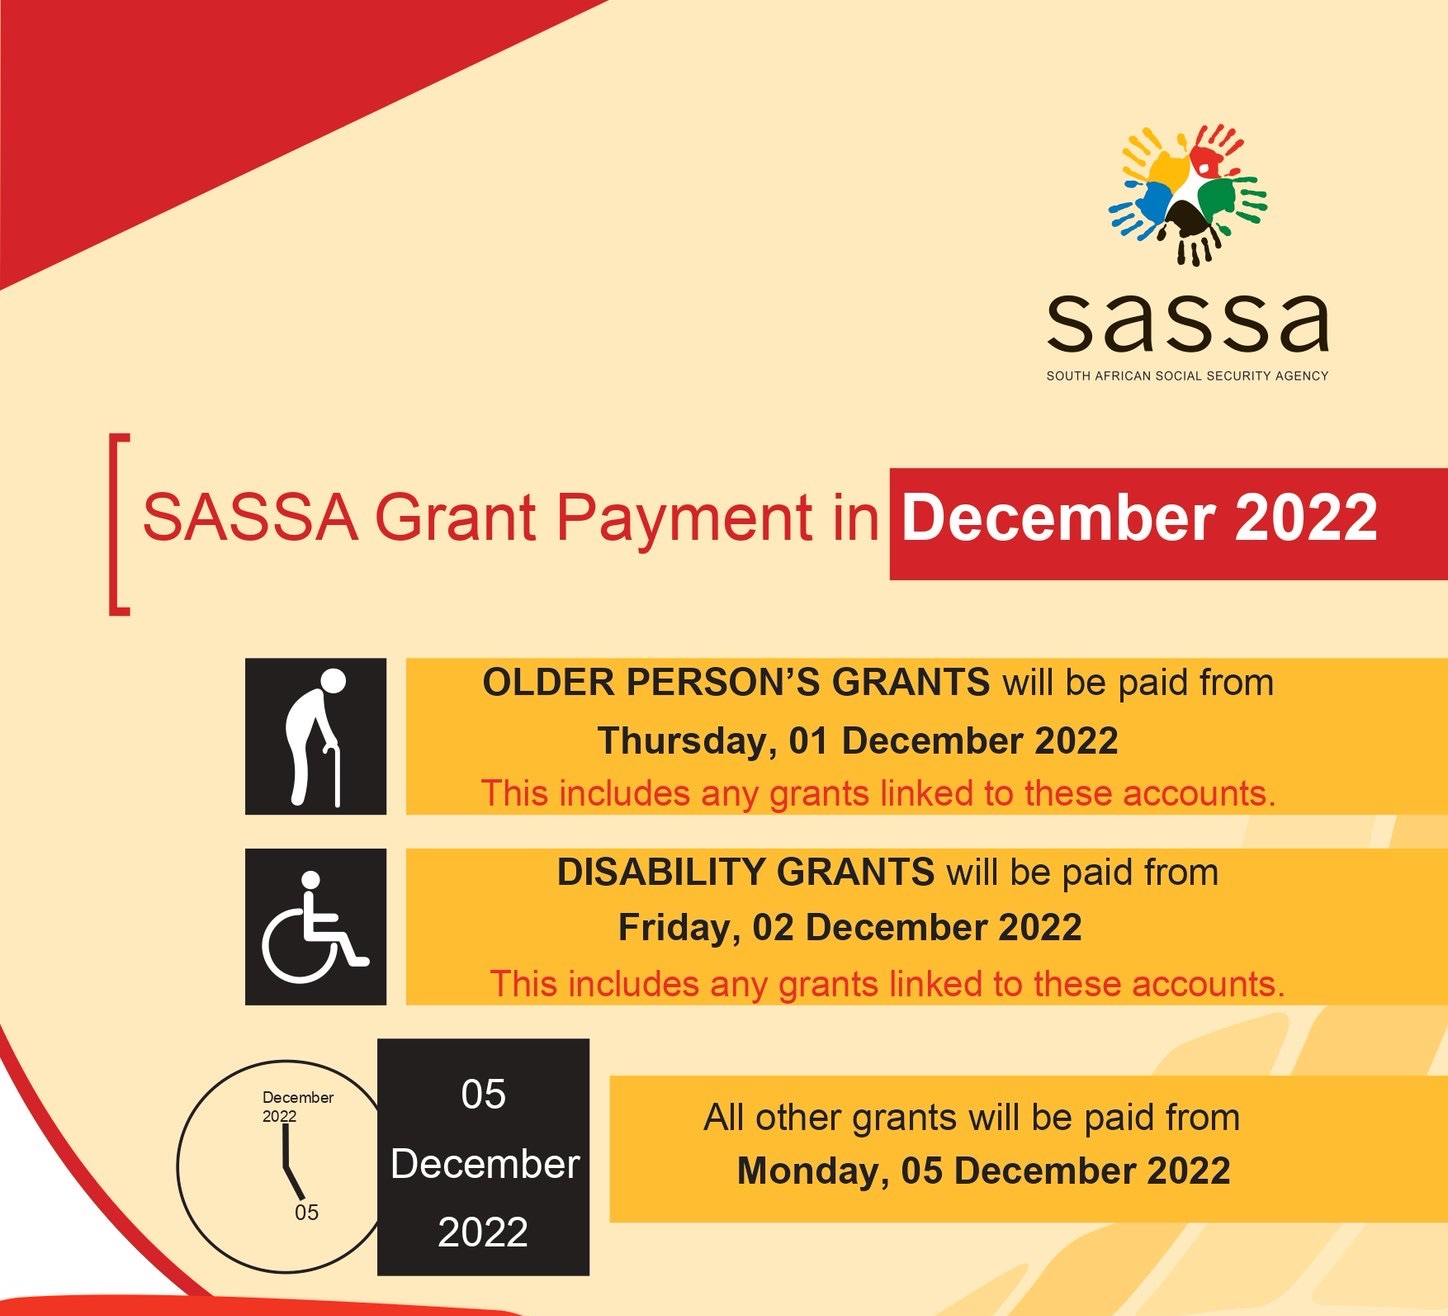 SASSA Grant Payment in December 2022